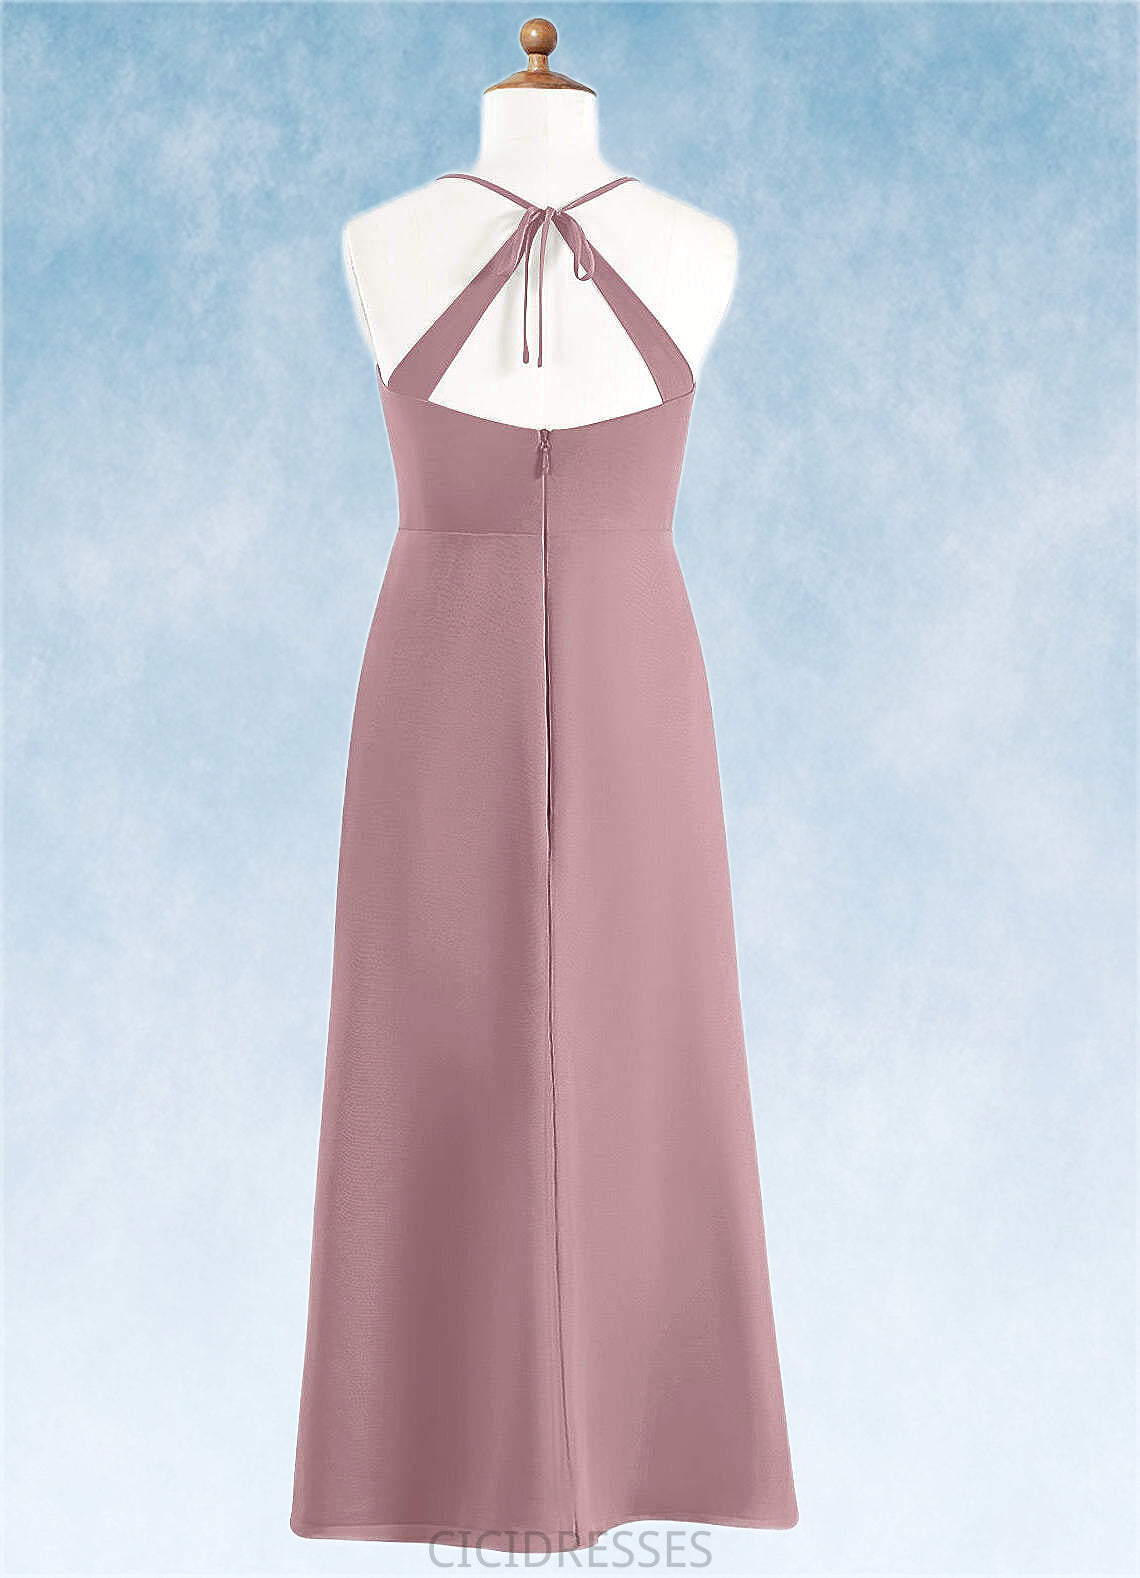 Jane A-Line Chiffon Floor-Length Junior Bridesmaid Dress dusty rose CIC8P0022856